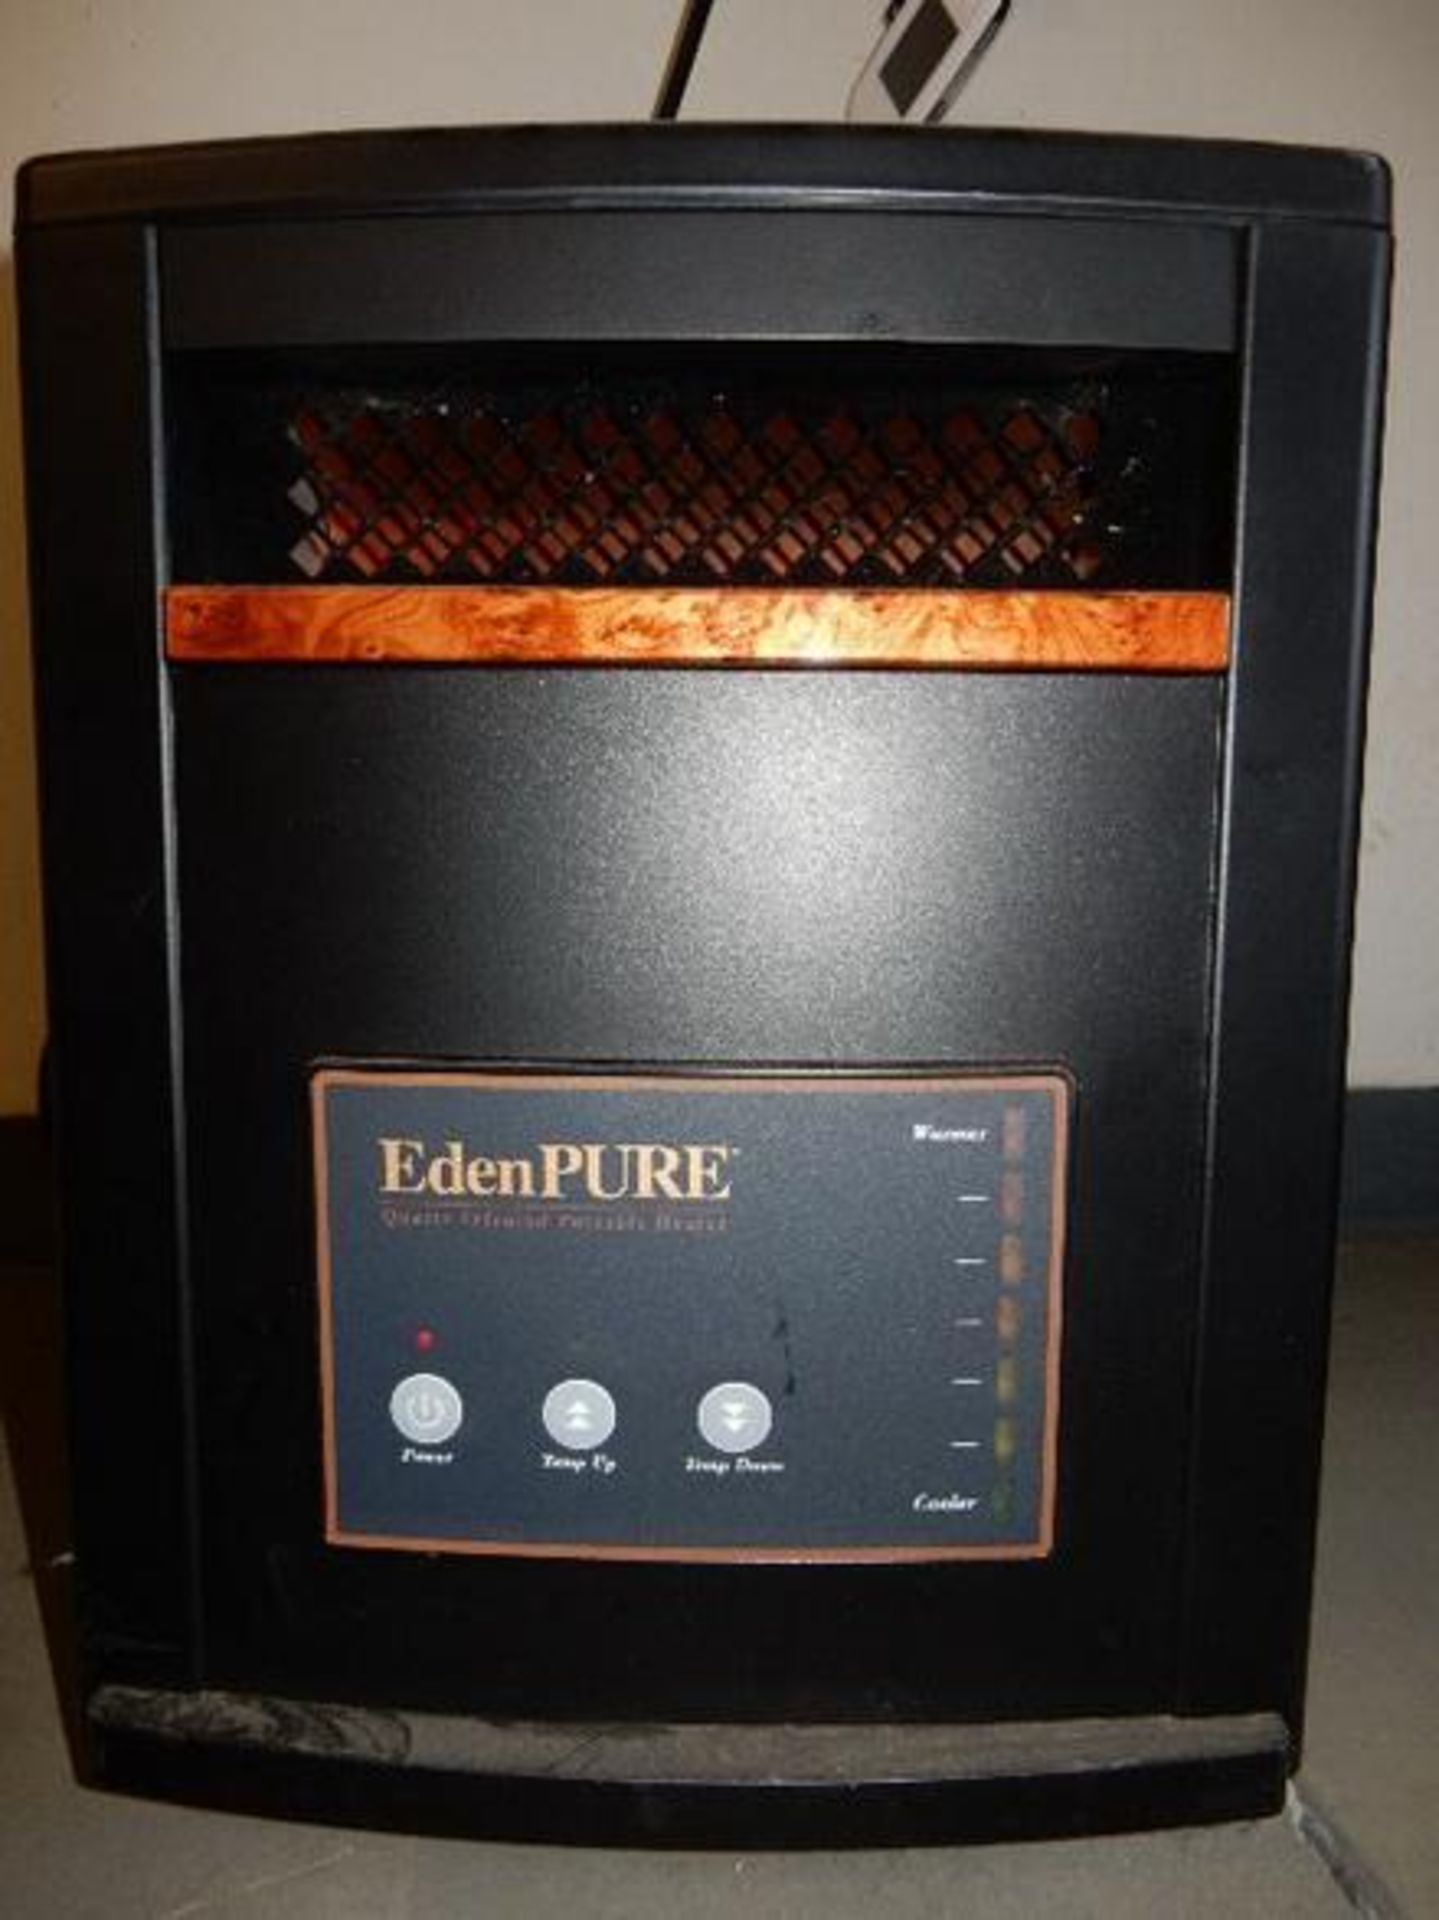 EdenPURE Copper Model: SMART1000XL Electric Infrared Quartz Heater - Image 5 of 5